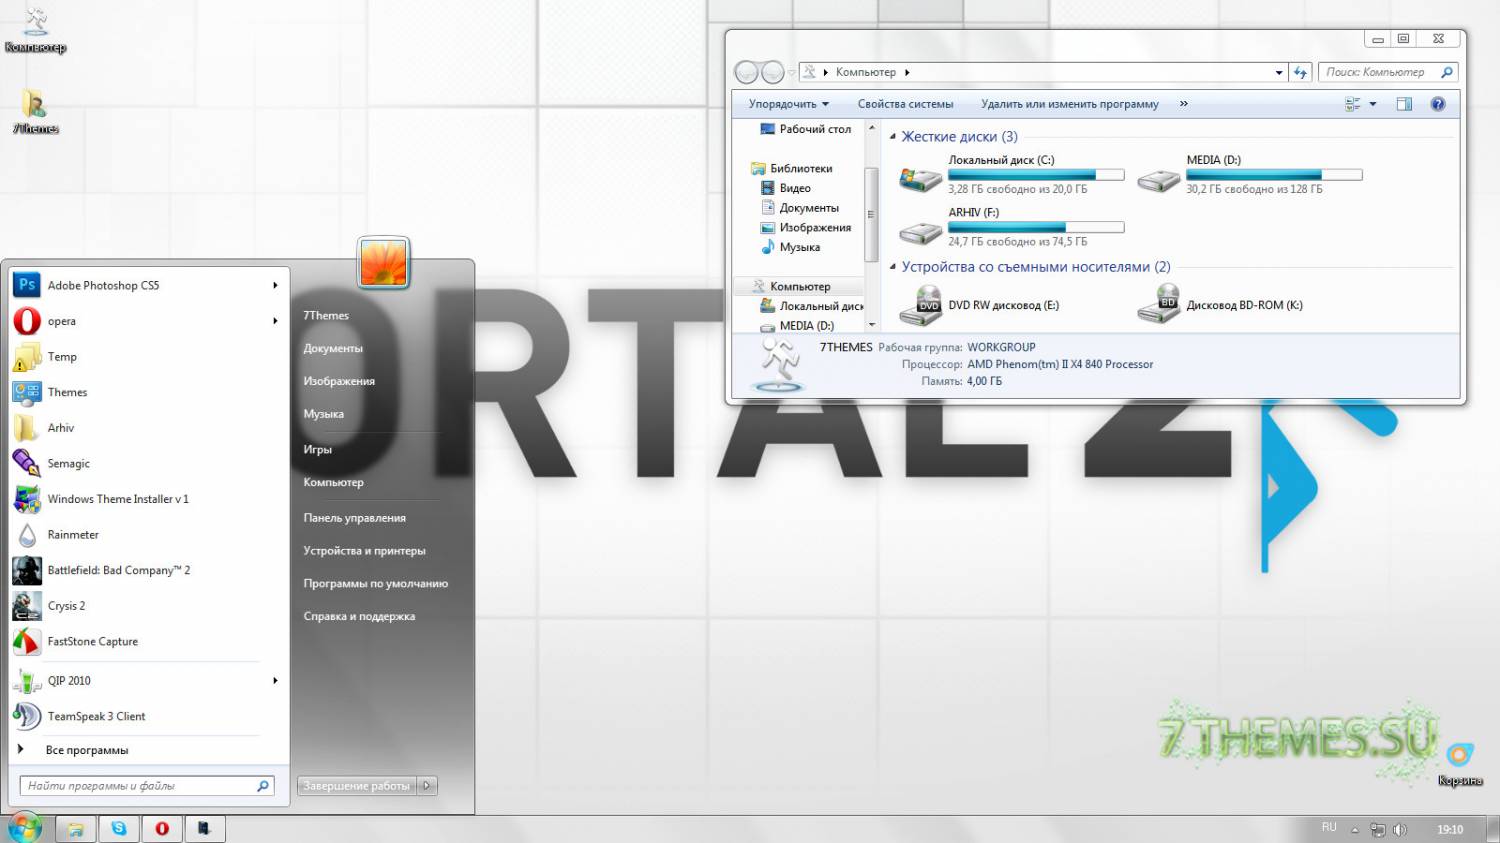 portal 2 image